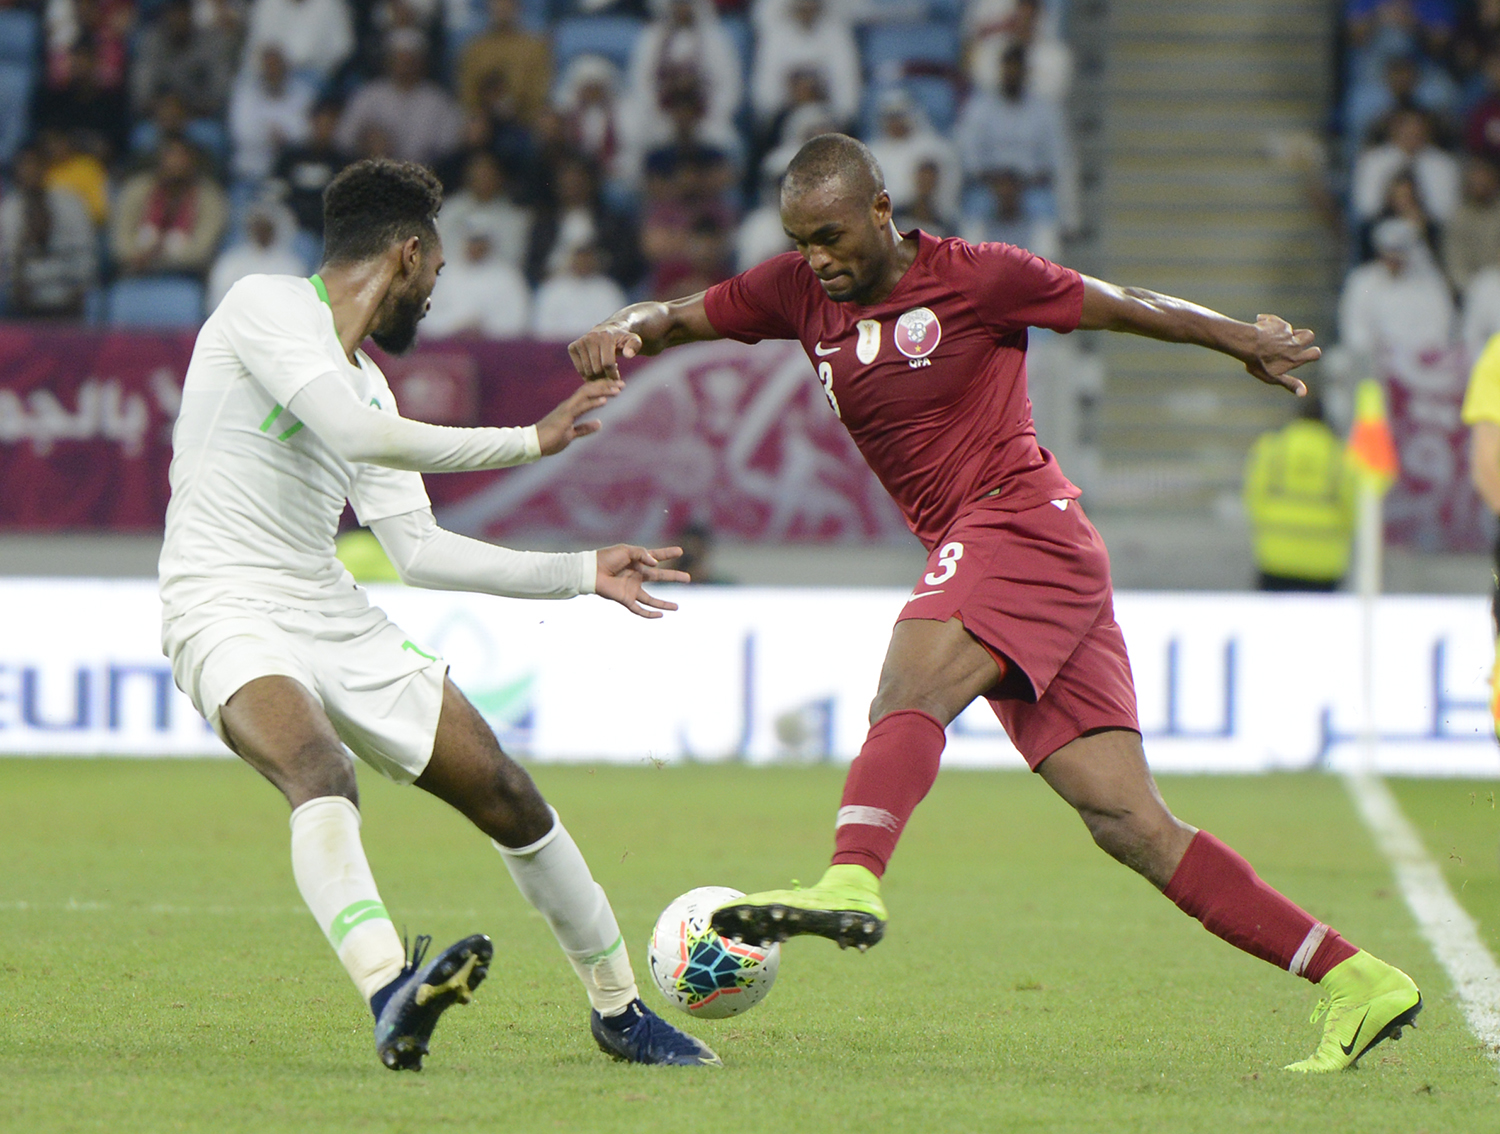 Saudi Arabia vs Qatar in Arabian Gulf Cup